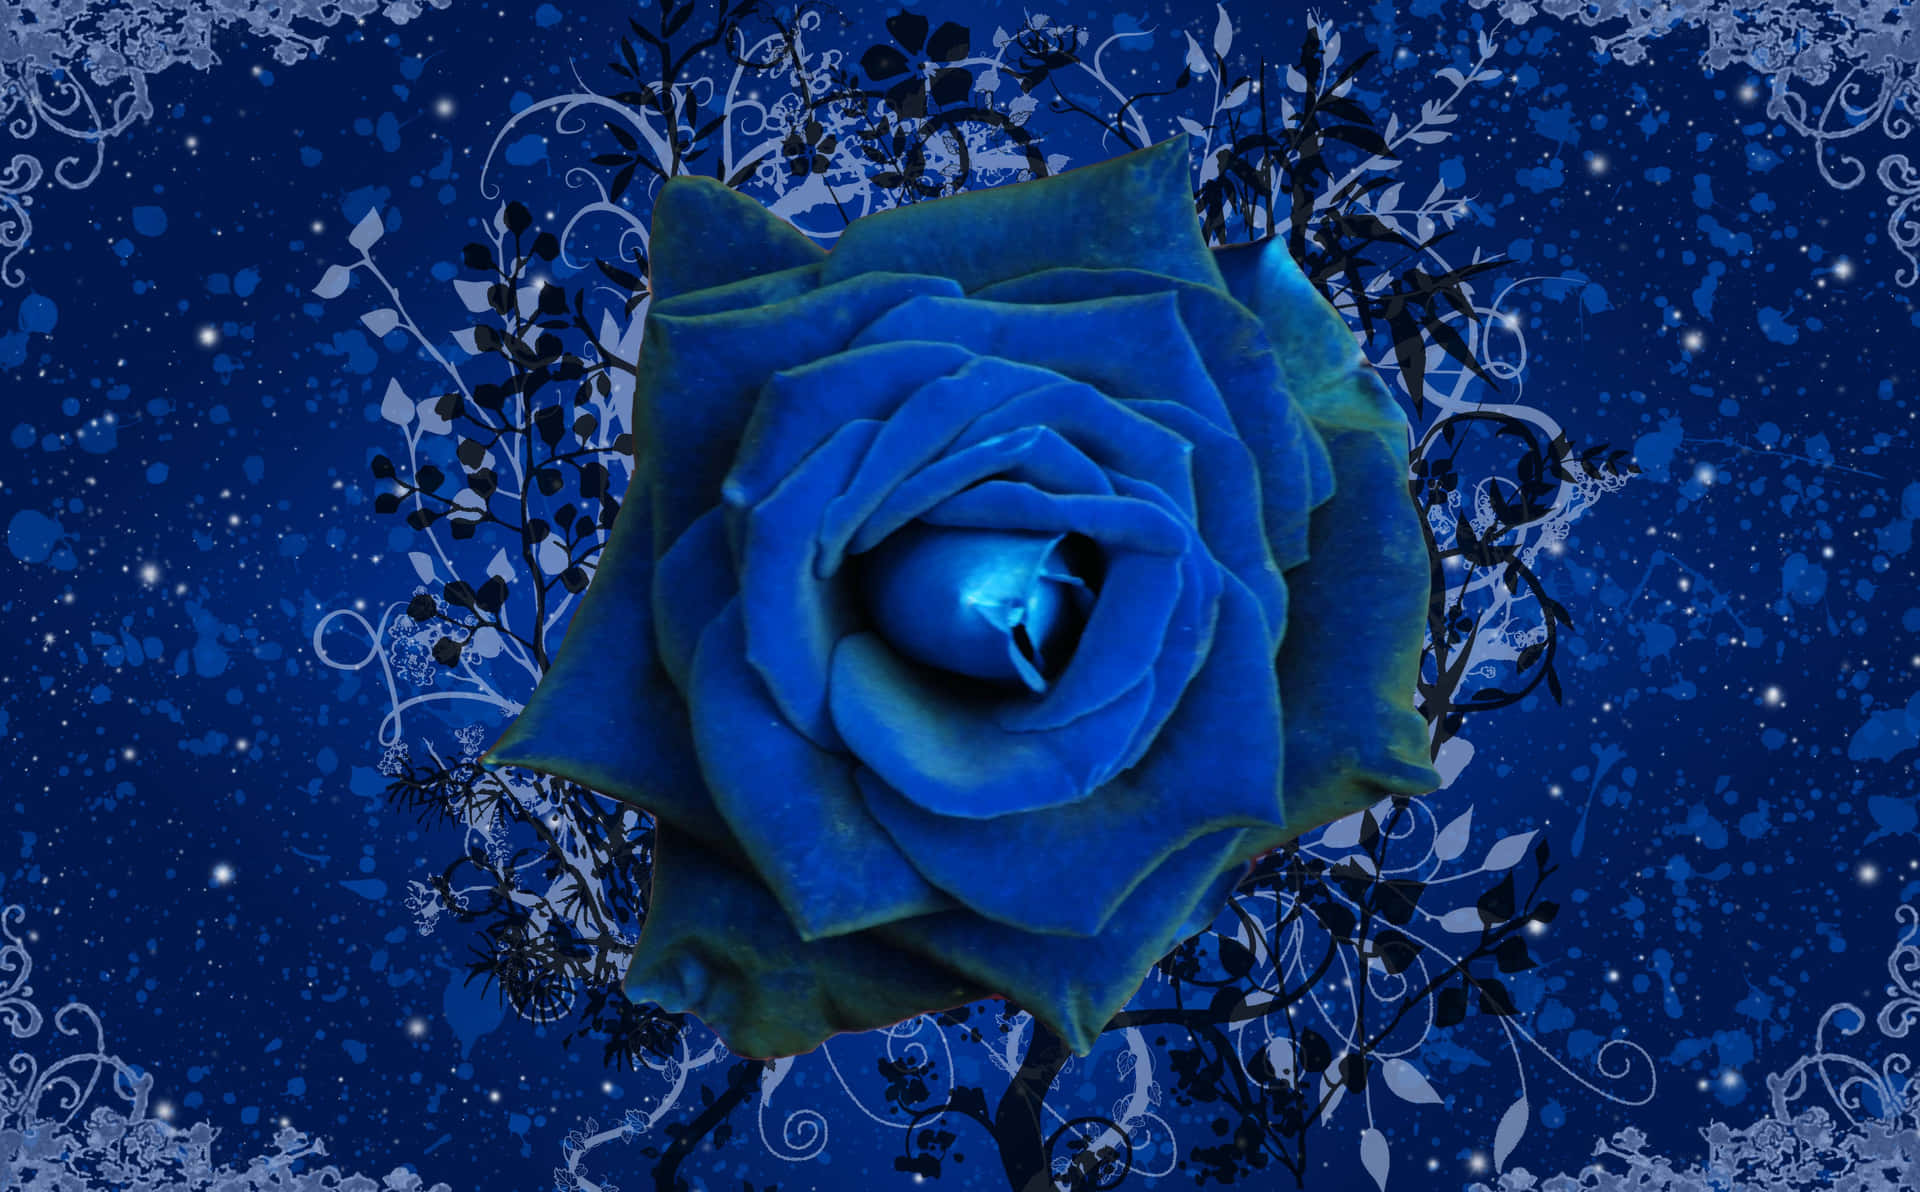 Imagende Arte Digital De Una Rosa Azul